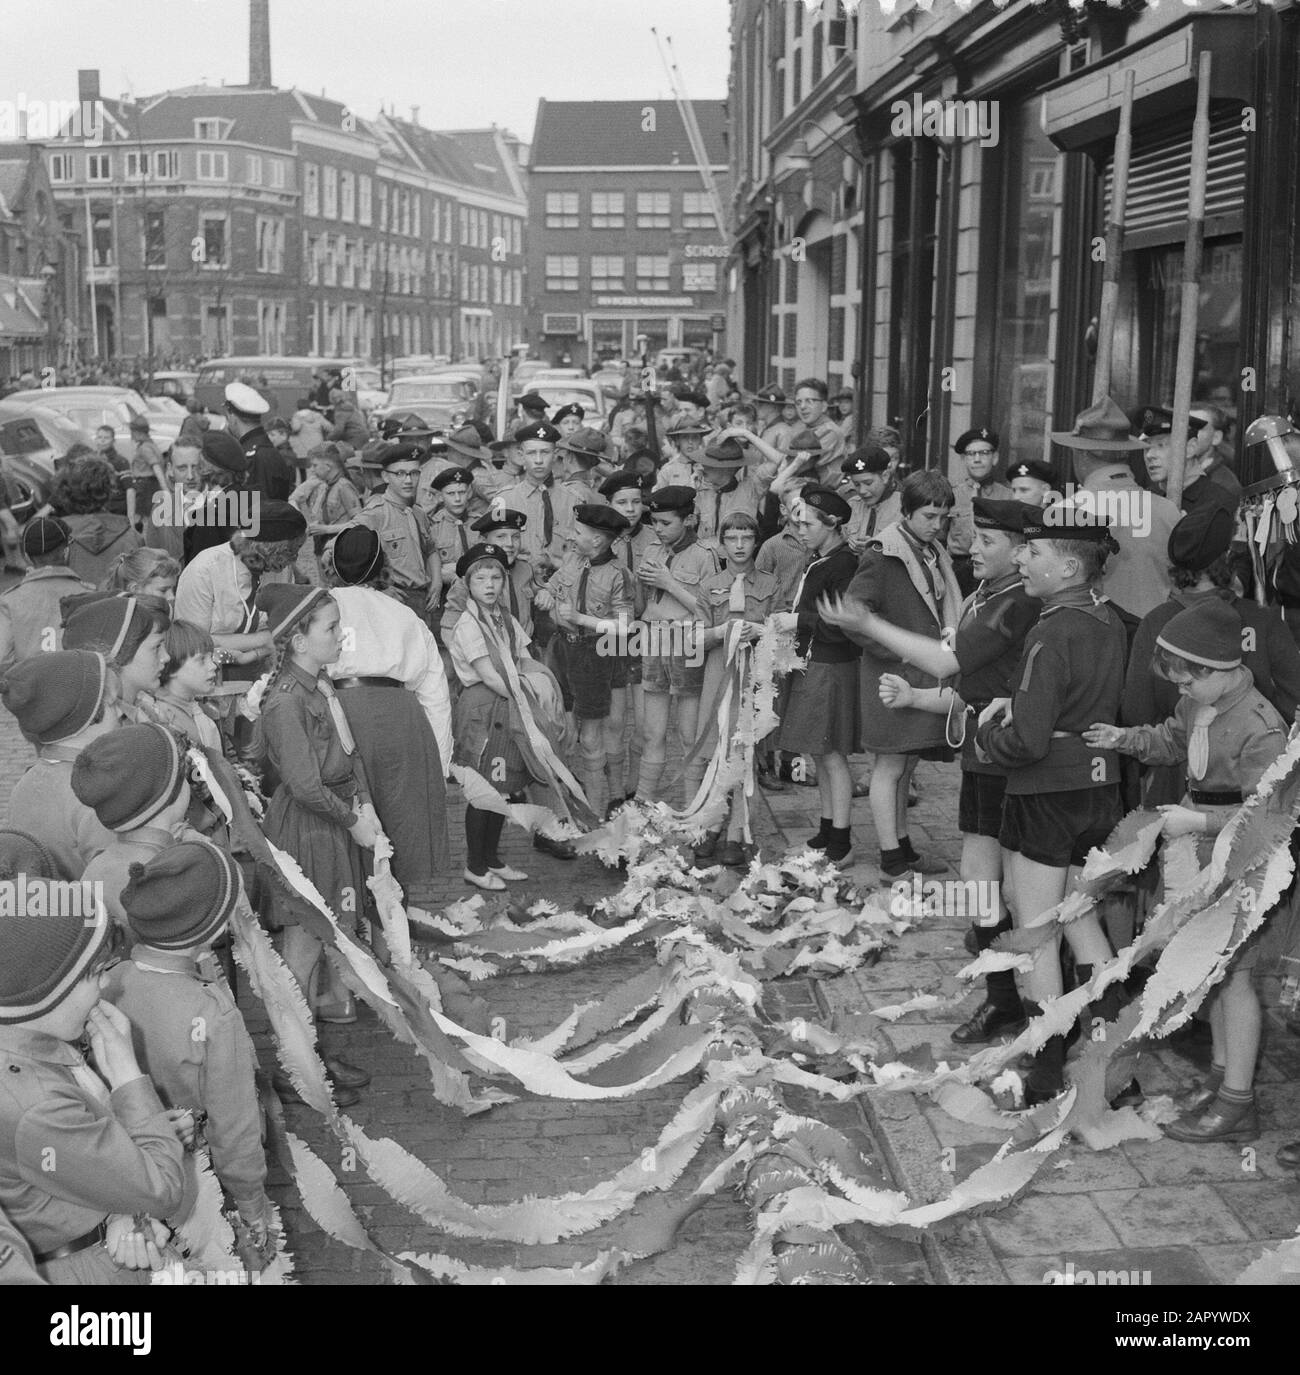 Heitje voor een Karweitje in Haarlem. Boy Scouts carry pole for Technical University of Applied Sciences Date: April 6, 1961 Location: Haarlem Keywords: Scouts, Technical Hogescholen Stock Photo